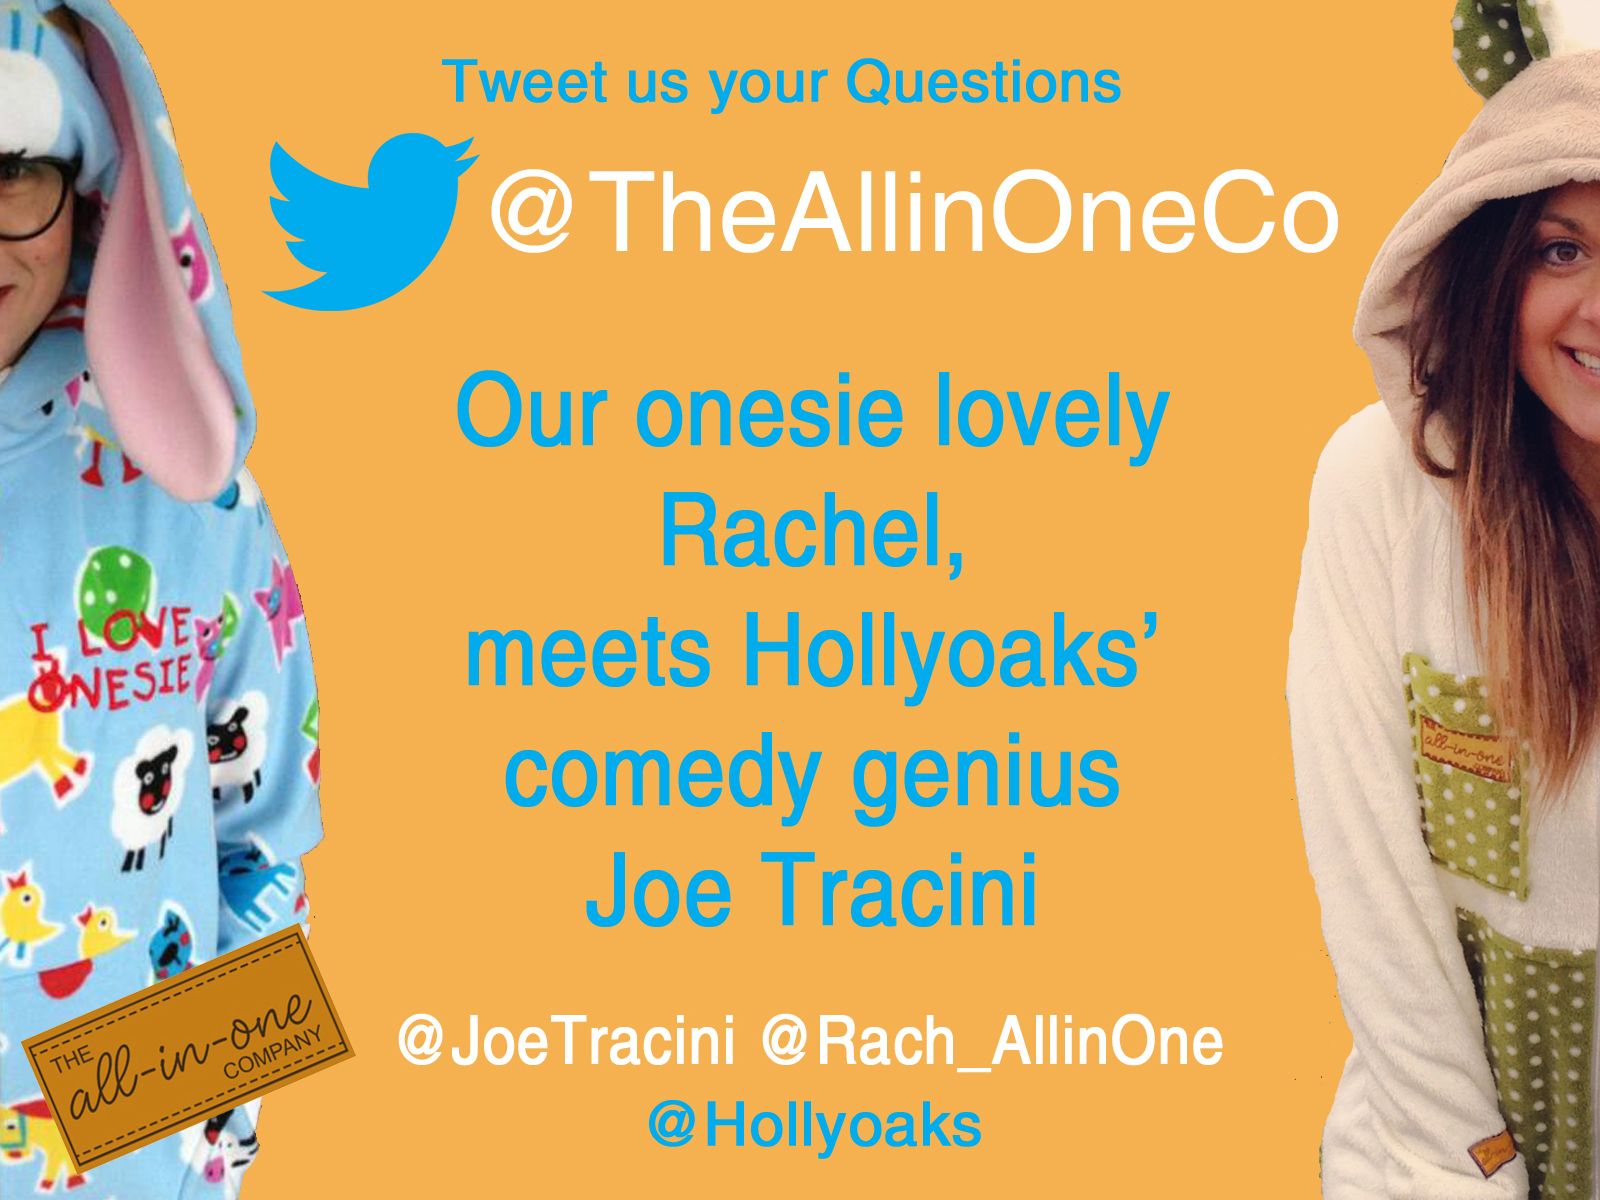 The All-in-One Adventure: Onesie Lovely Rachel meets Hollyoaks Joe Tracini